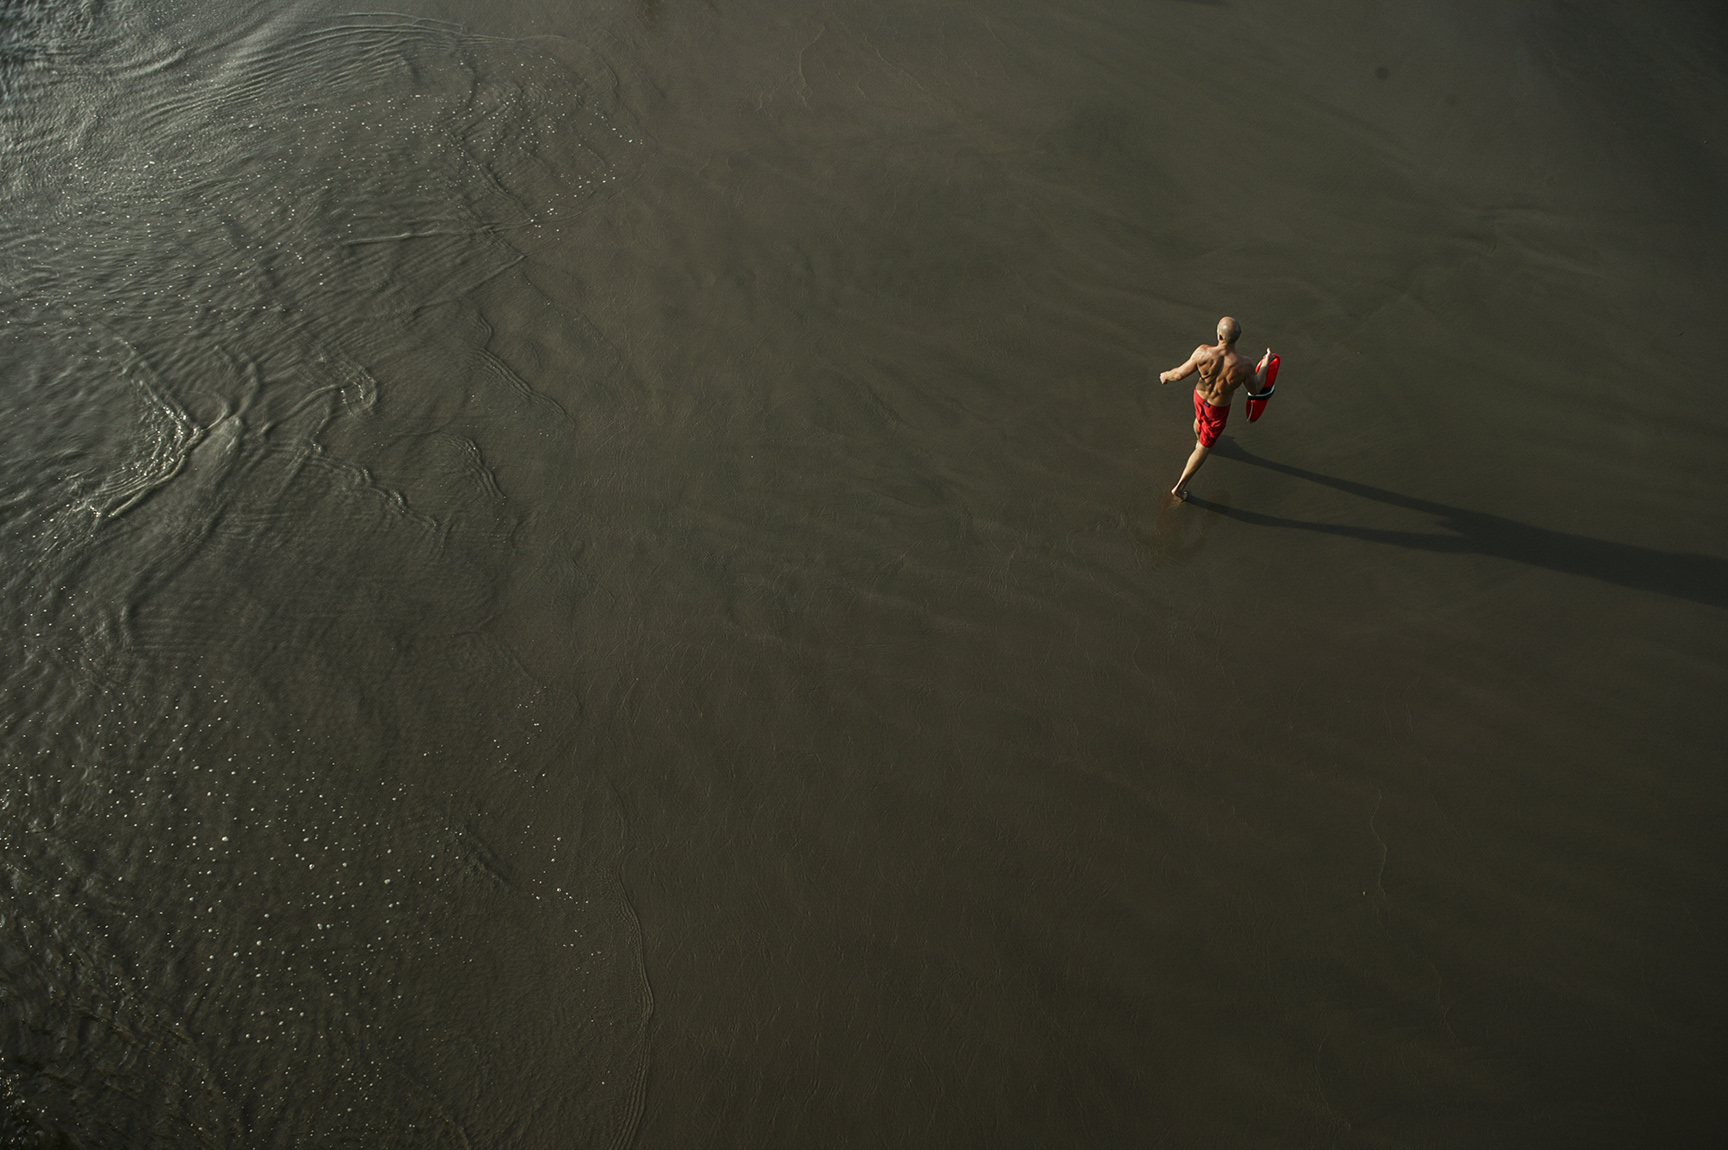  A lifeguard patrols the beaches of Santa Monica. 